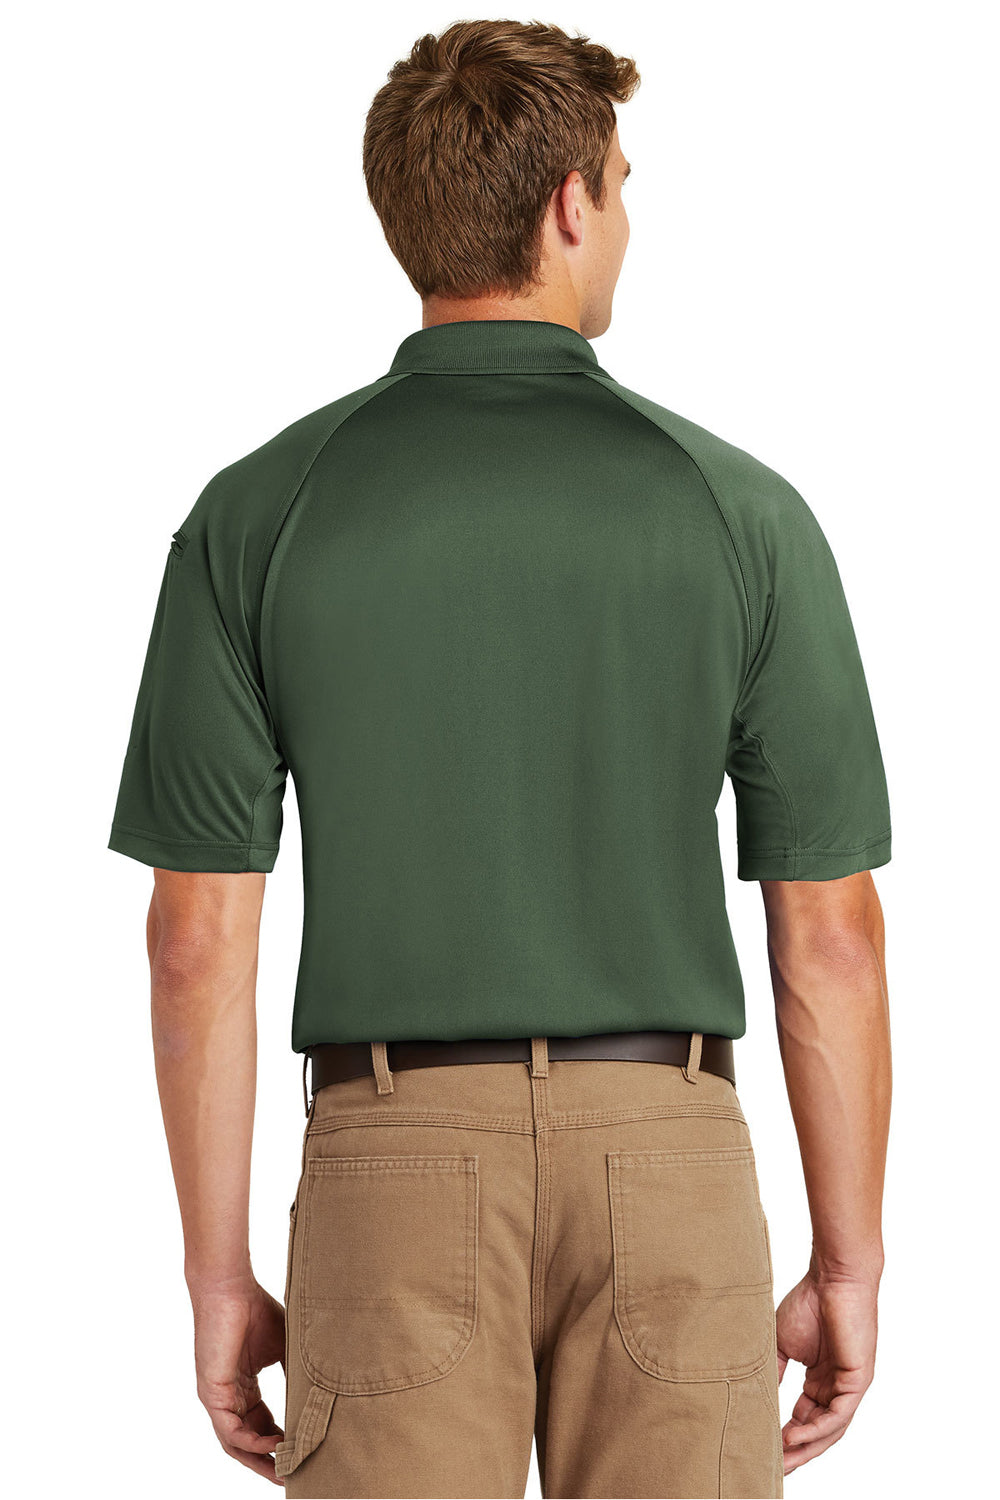 CornerStone CS410 Mens Select Tactical Moisture Wicking Short Sleeve Polo Shirt Dark Green Back